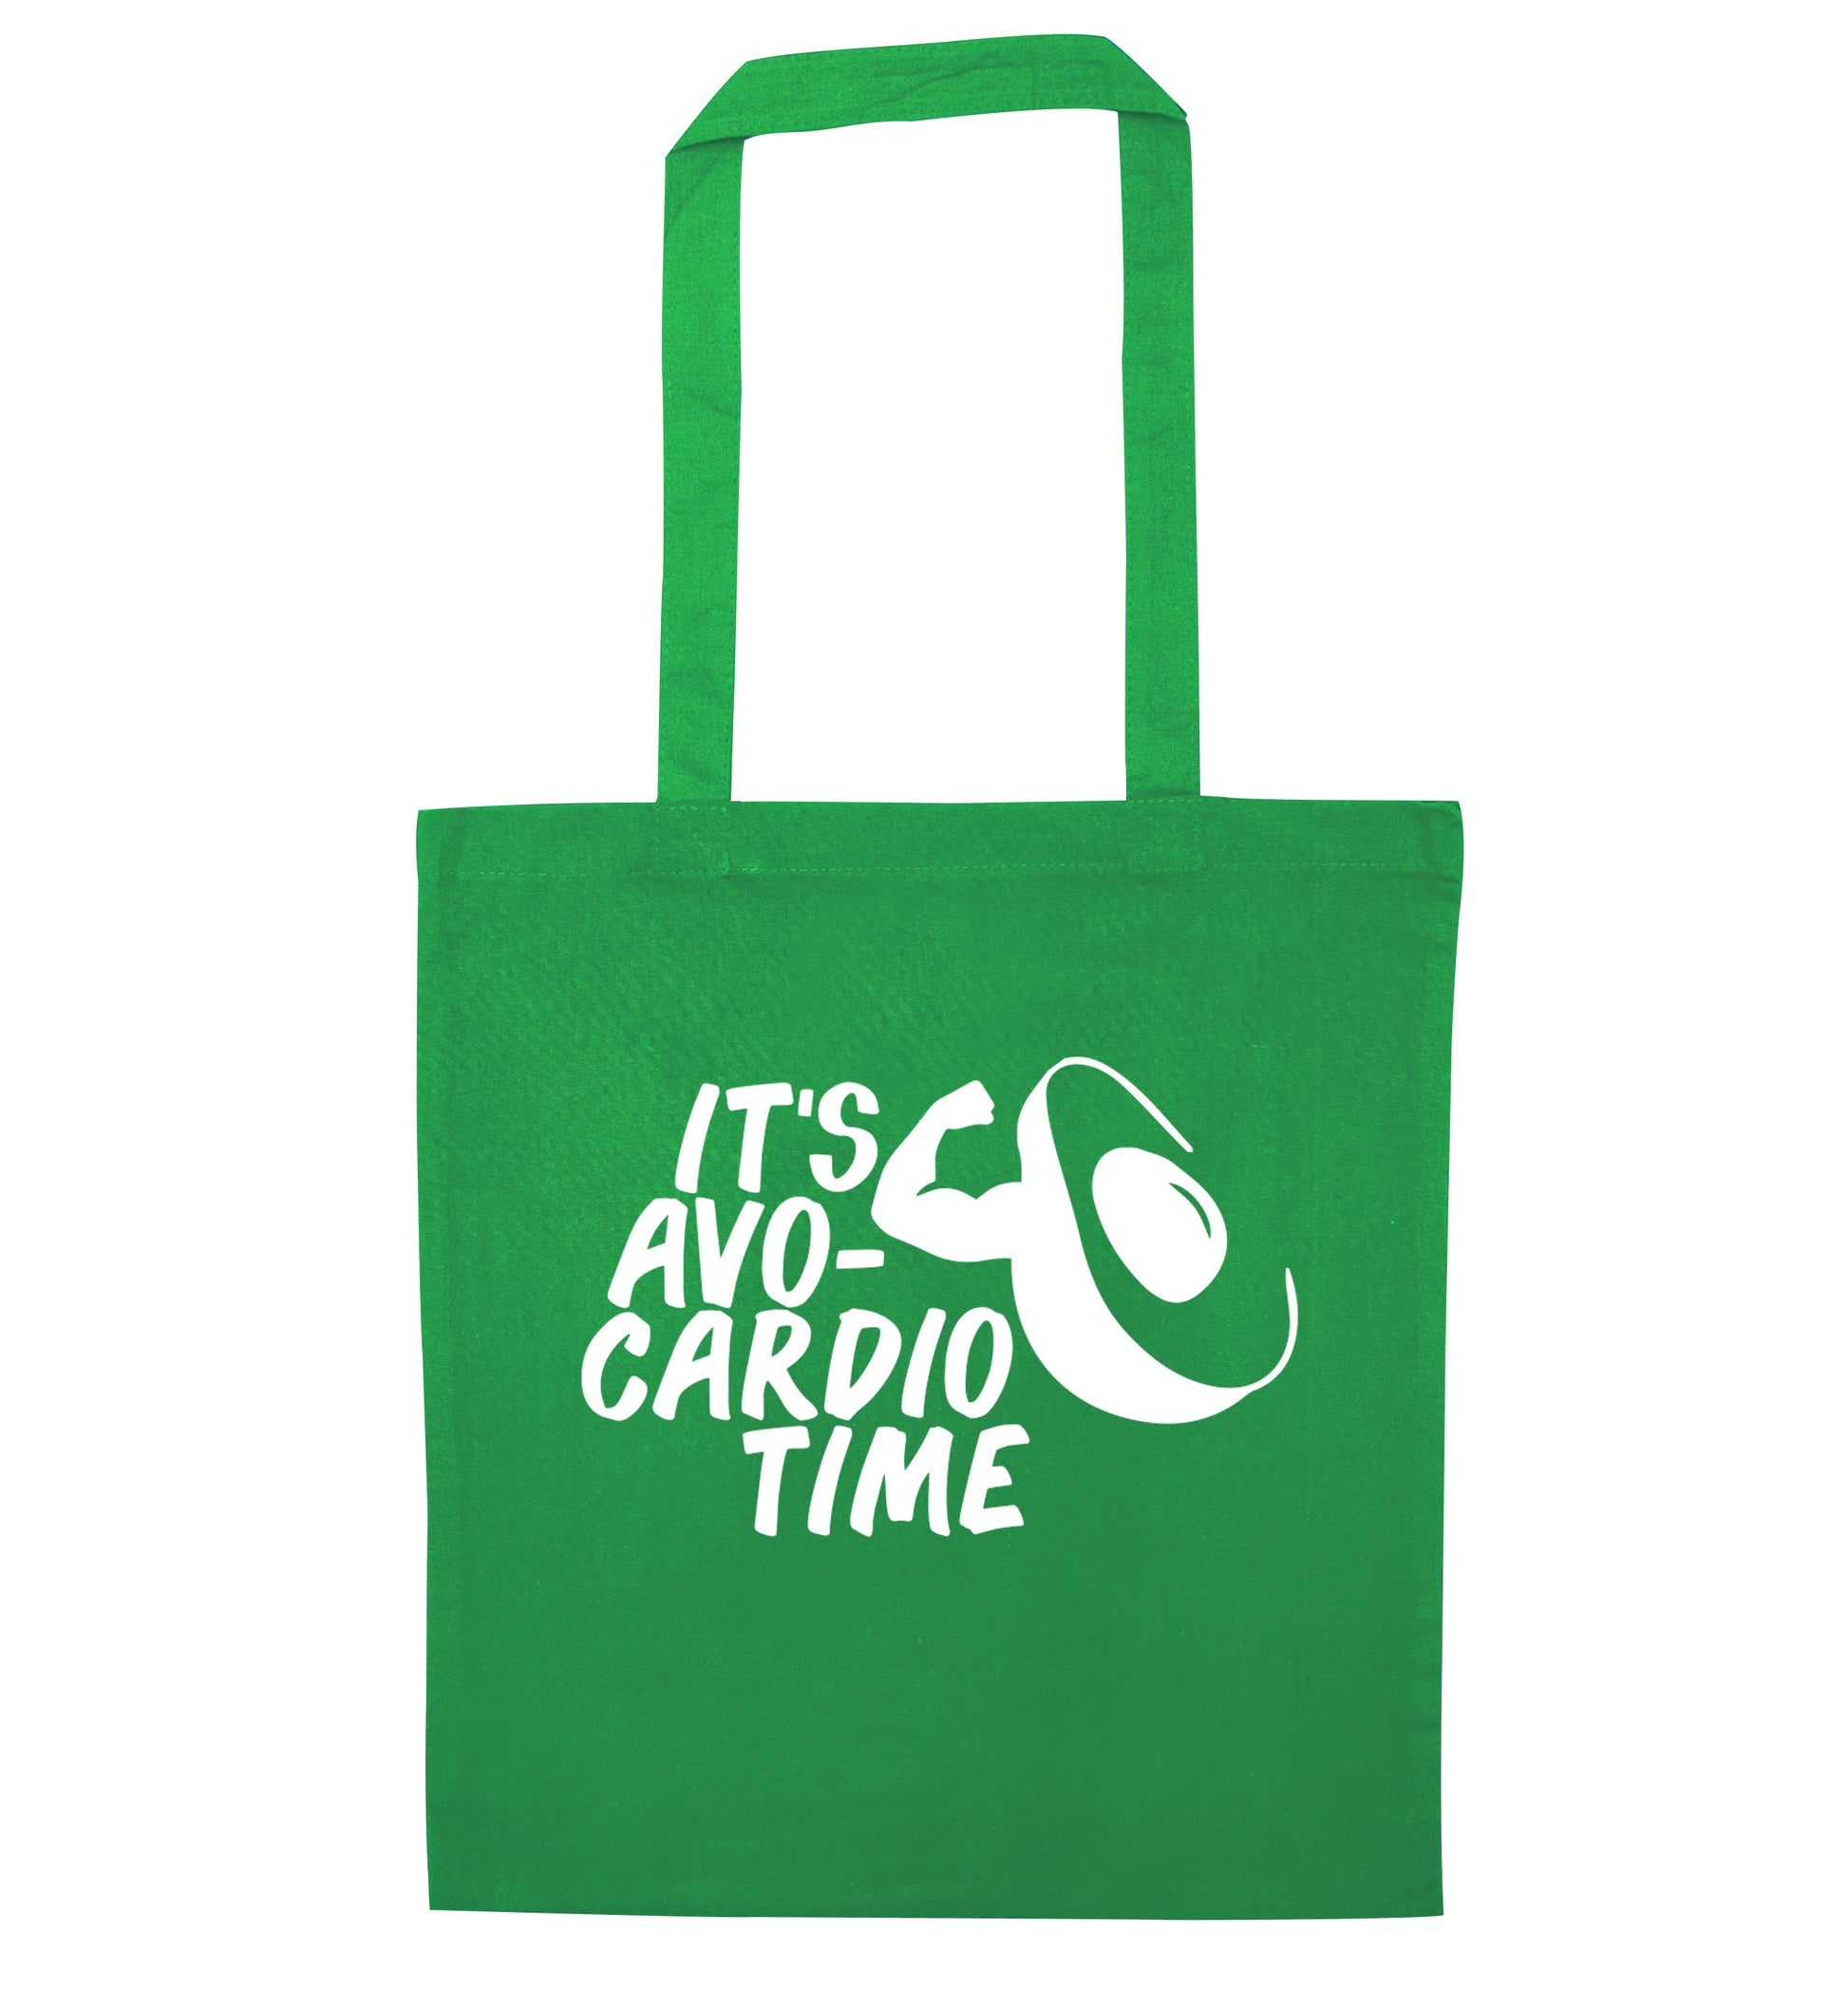 It's avo-cardio time green tote bag